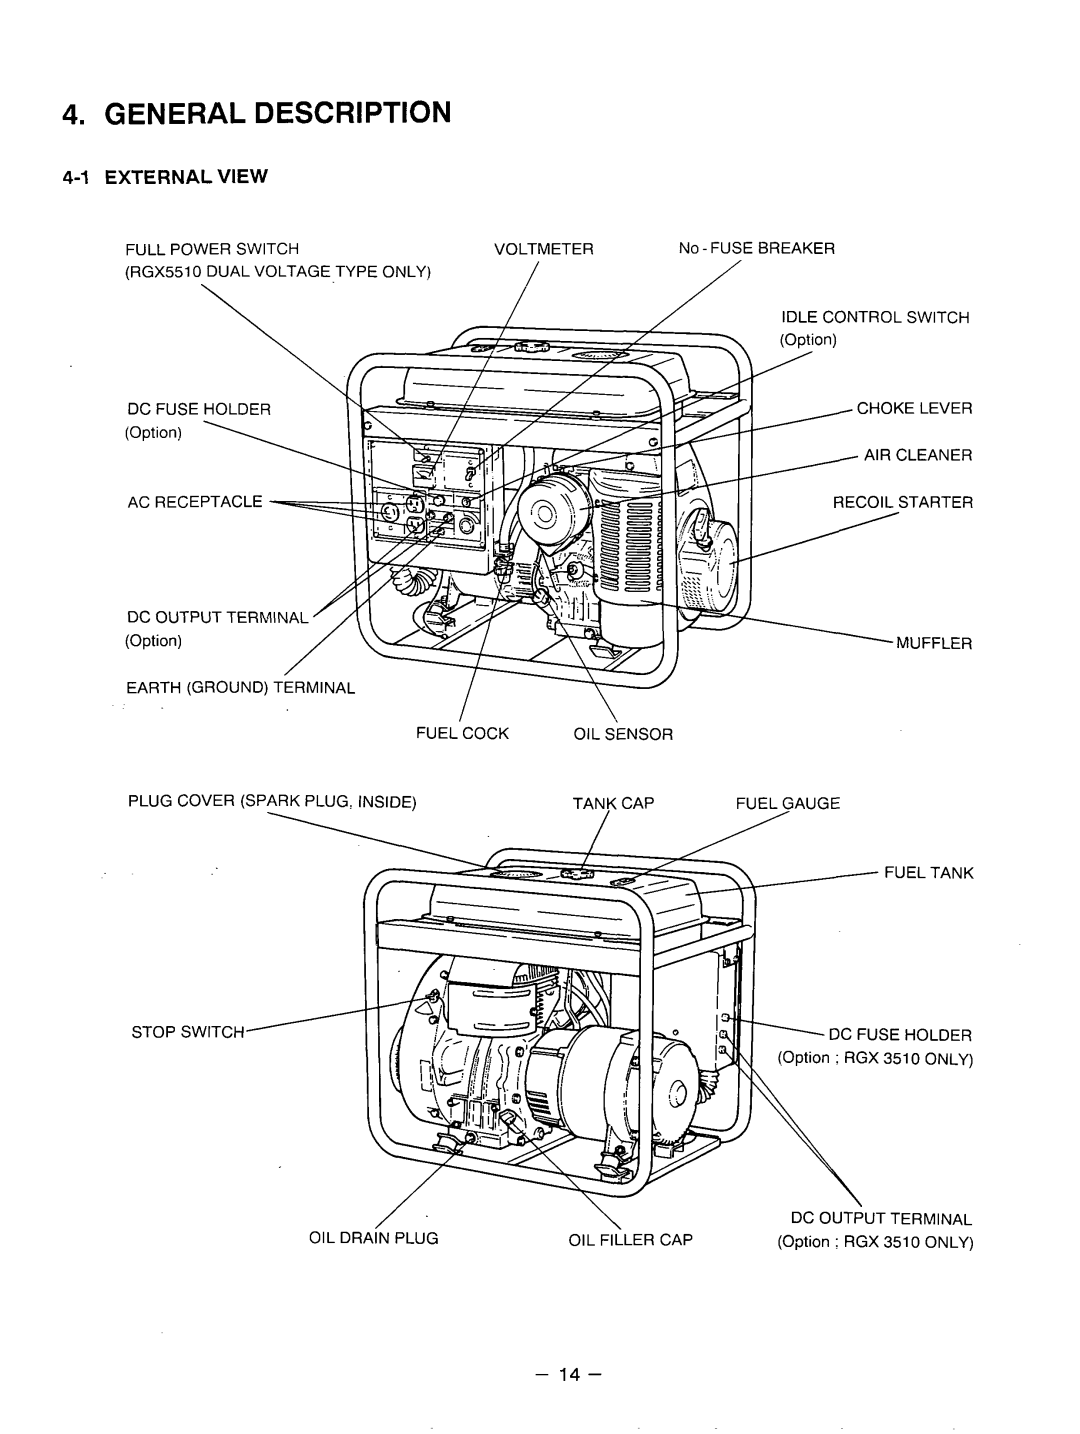 Subaru Robin Power Products RGX3510 manual General Description, External View 